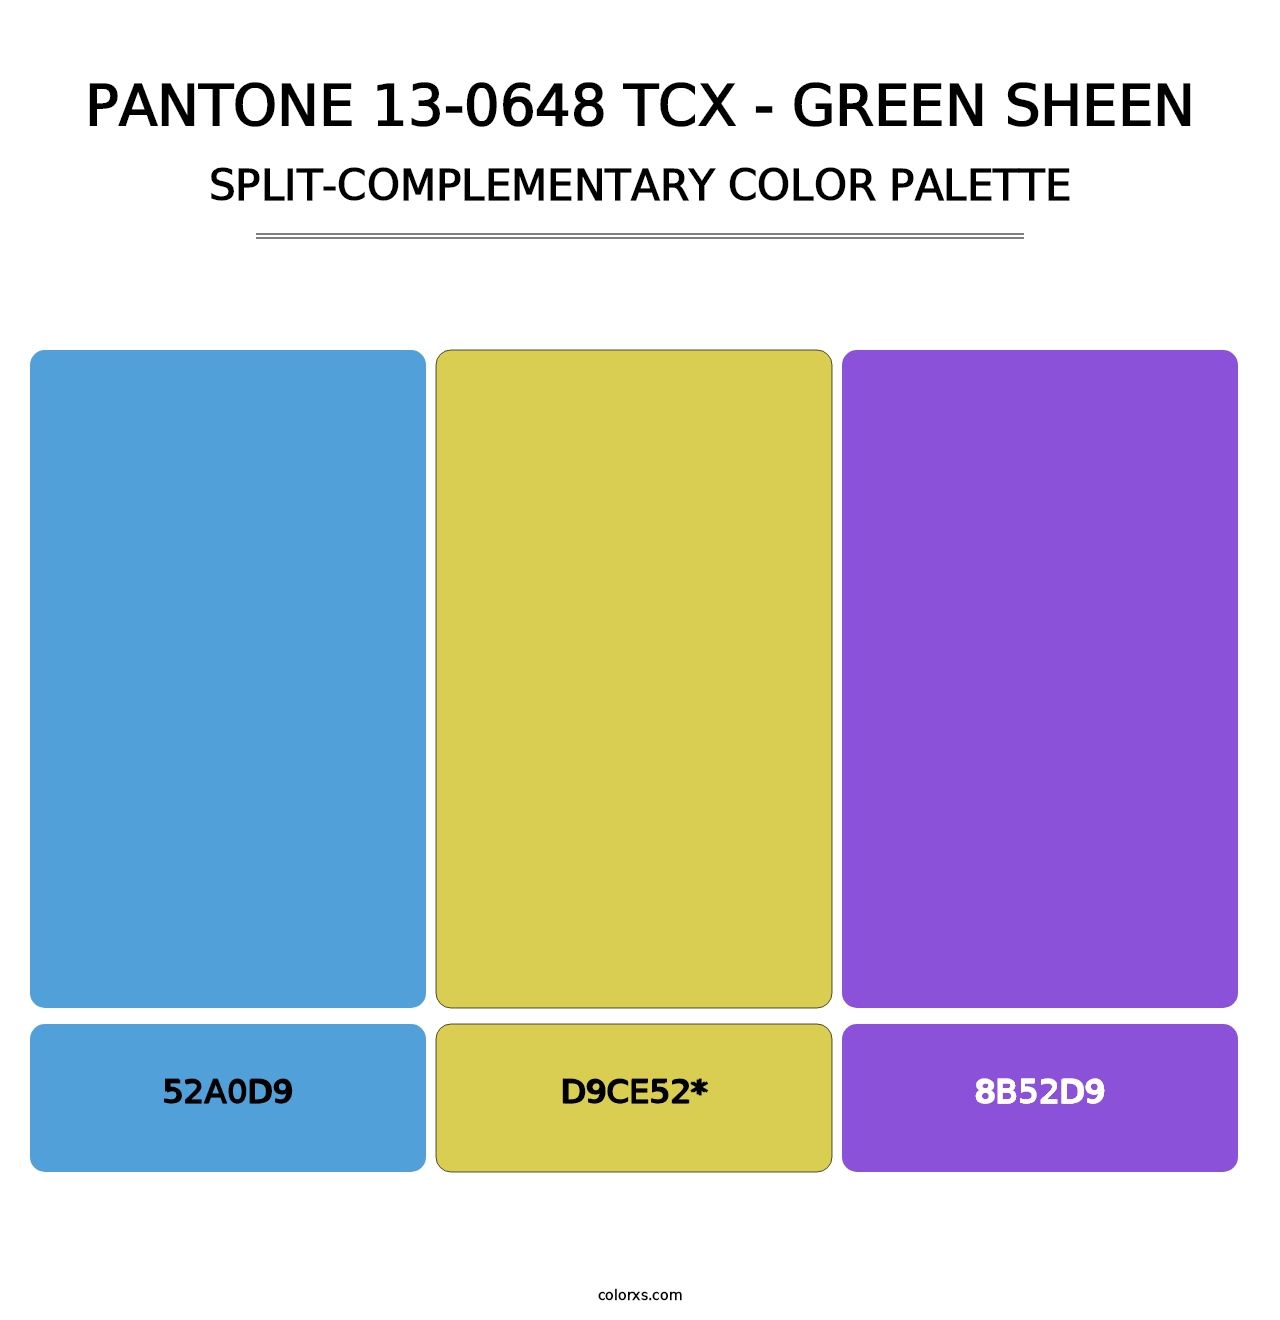 PANTONE 13-0648 TCX - Green Sheen - Split-Complementary Color Palette